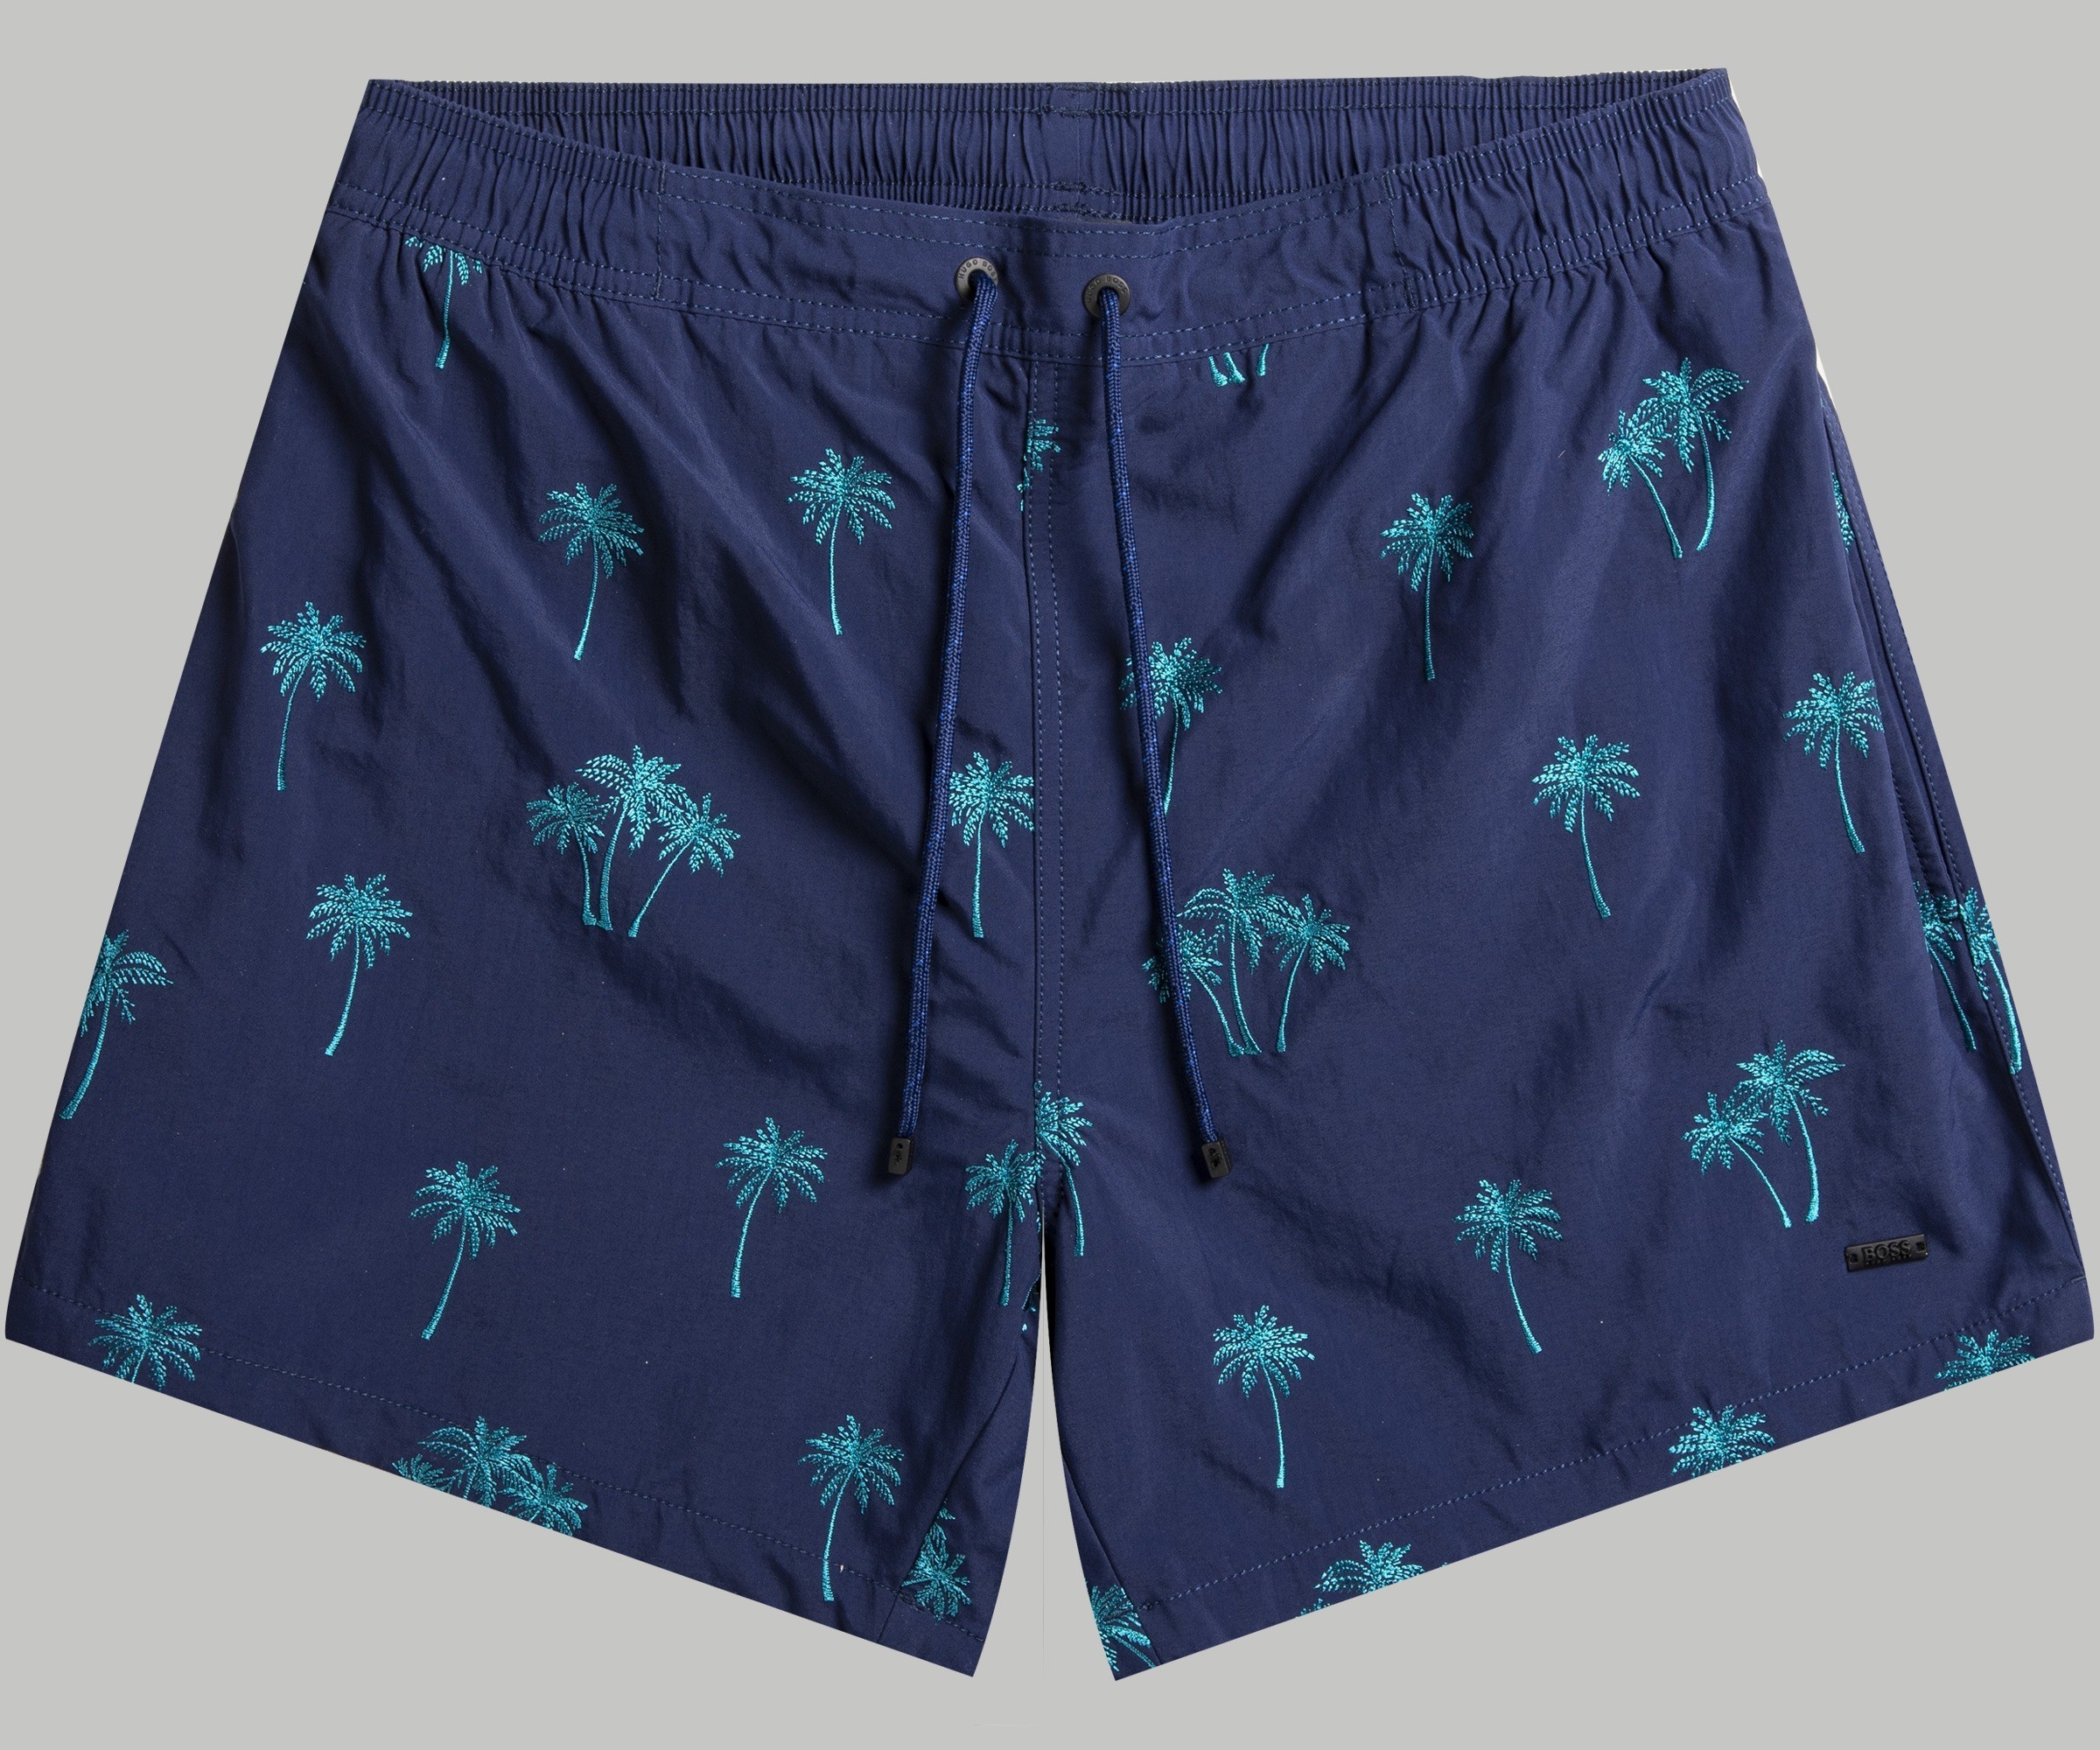 HUGO BOSS 'Piranha' Palm Tree Swim Shorts Navy